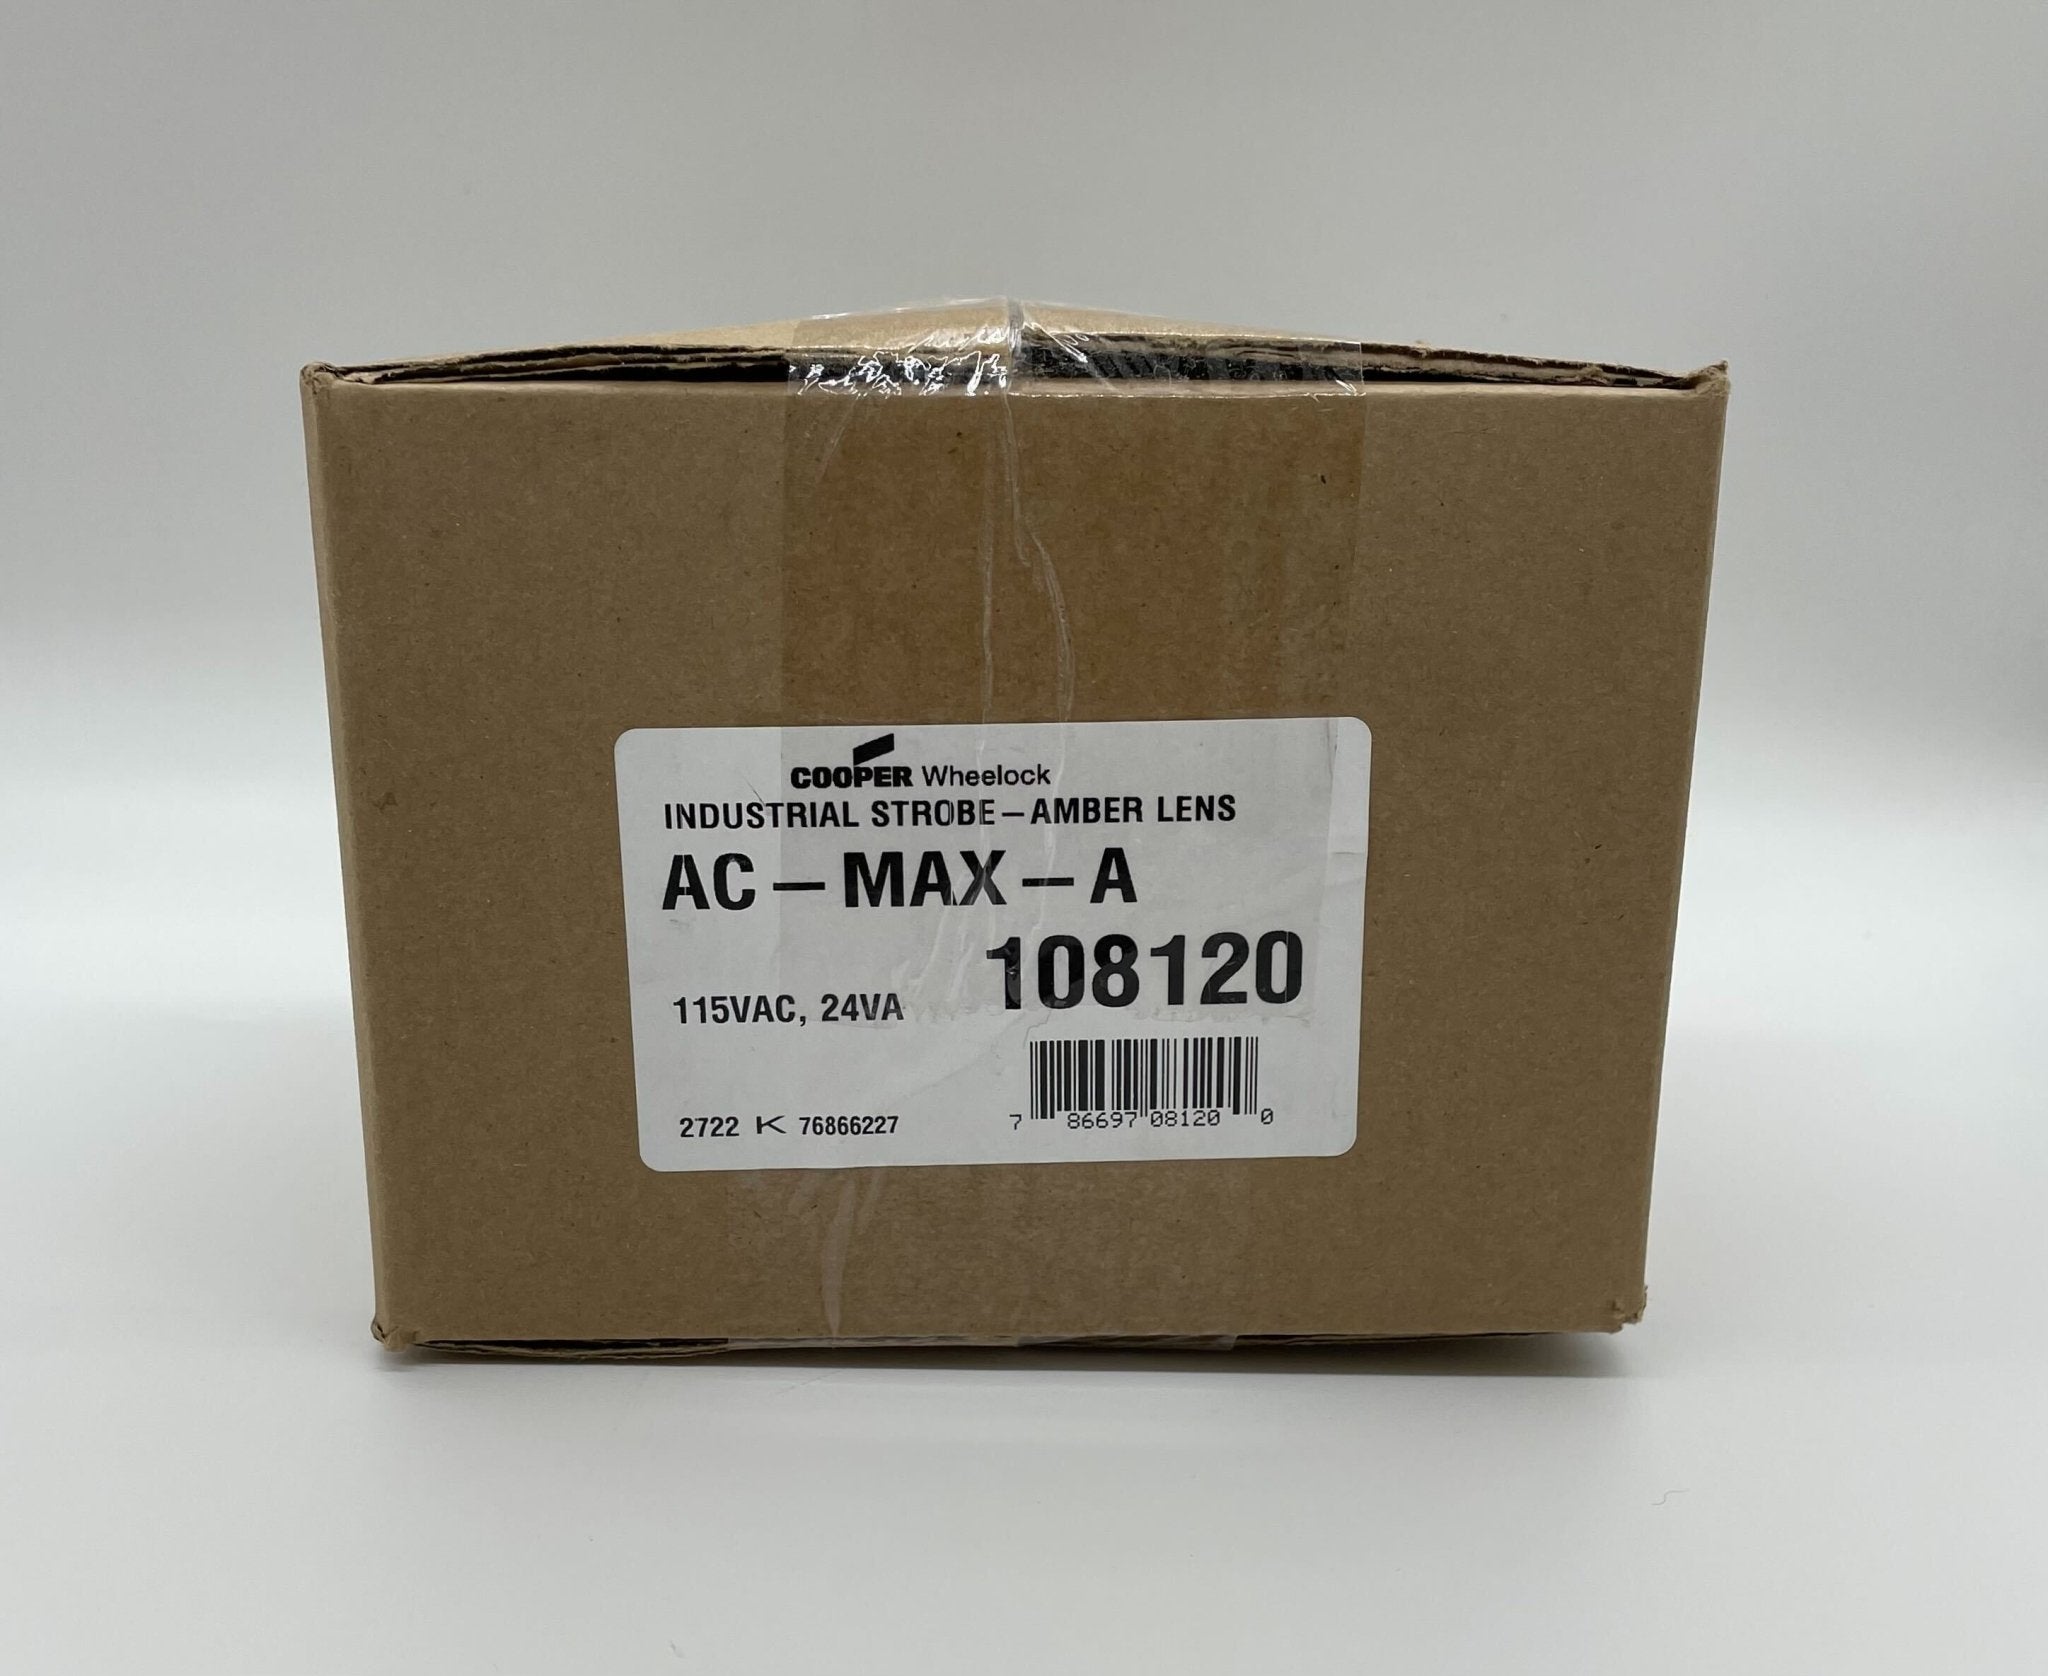 Wheelock AC-MAX-A - The Fire Alarm Supplier